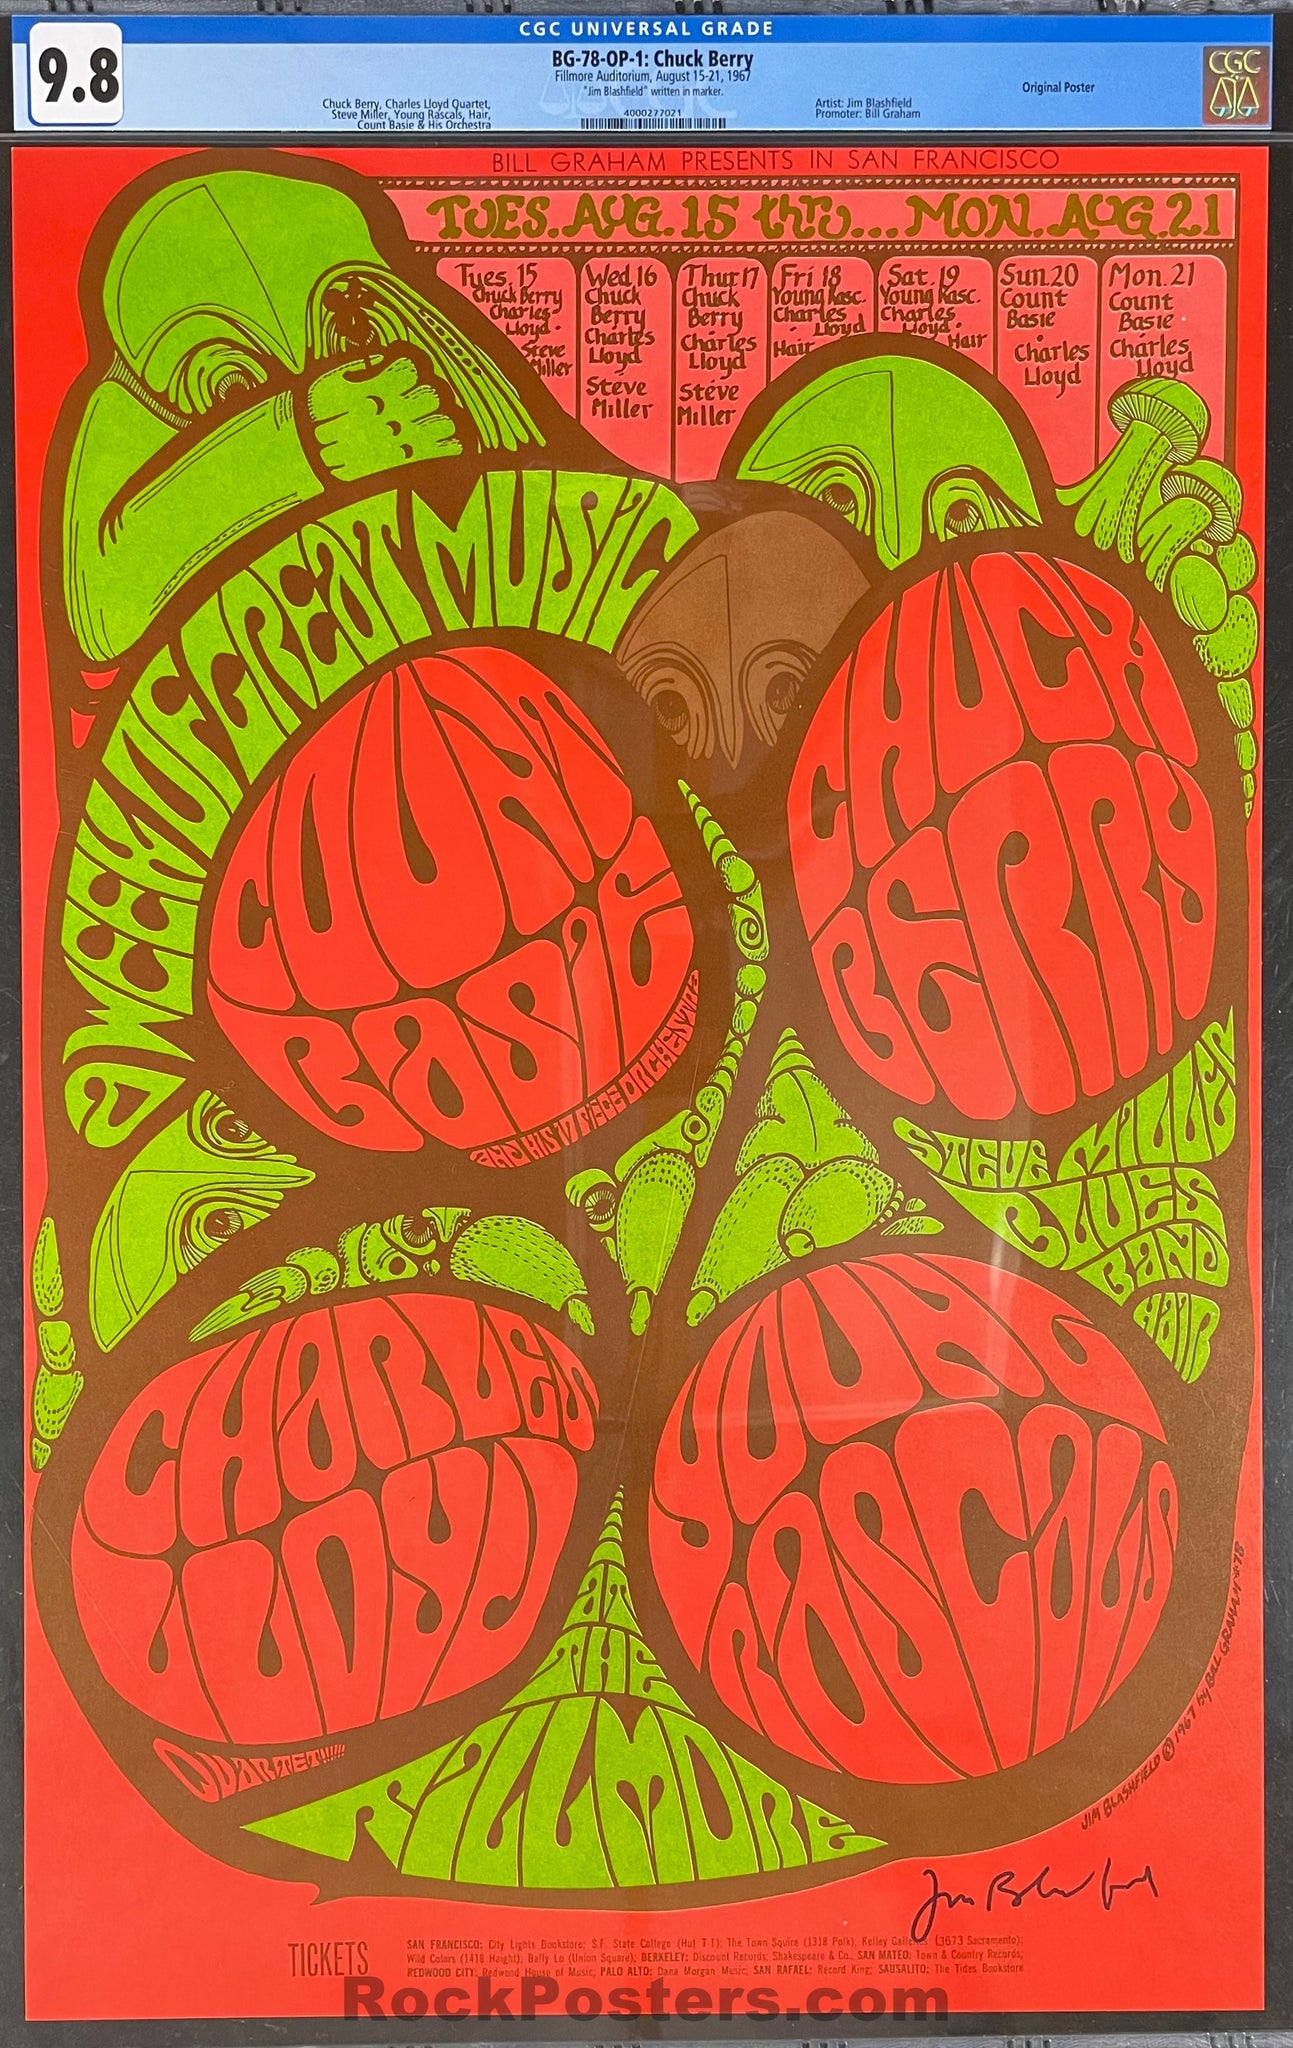 BG-78 - Count Basie - Chuck Berry - Jim Blashfield Signed - 1967 Poster - Fillmore Auditorium - CGC Graded 9.8